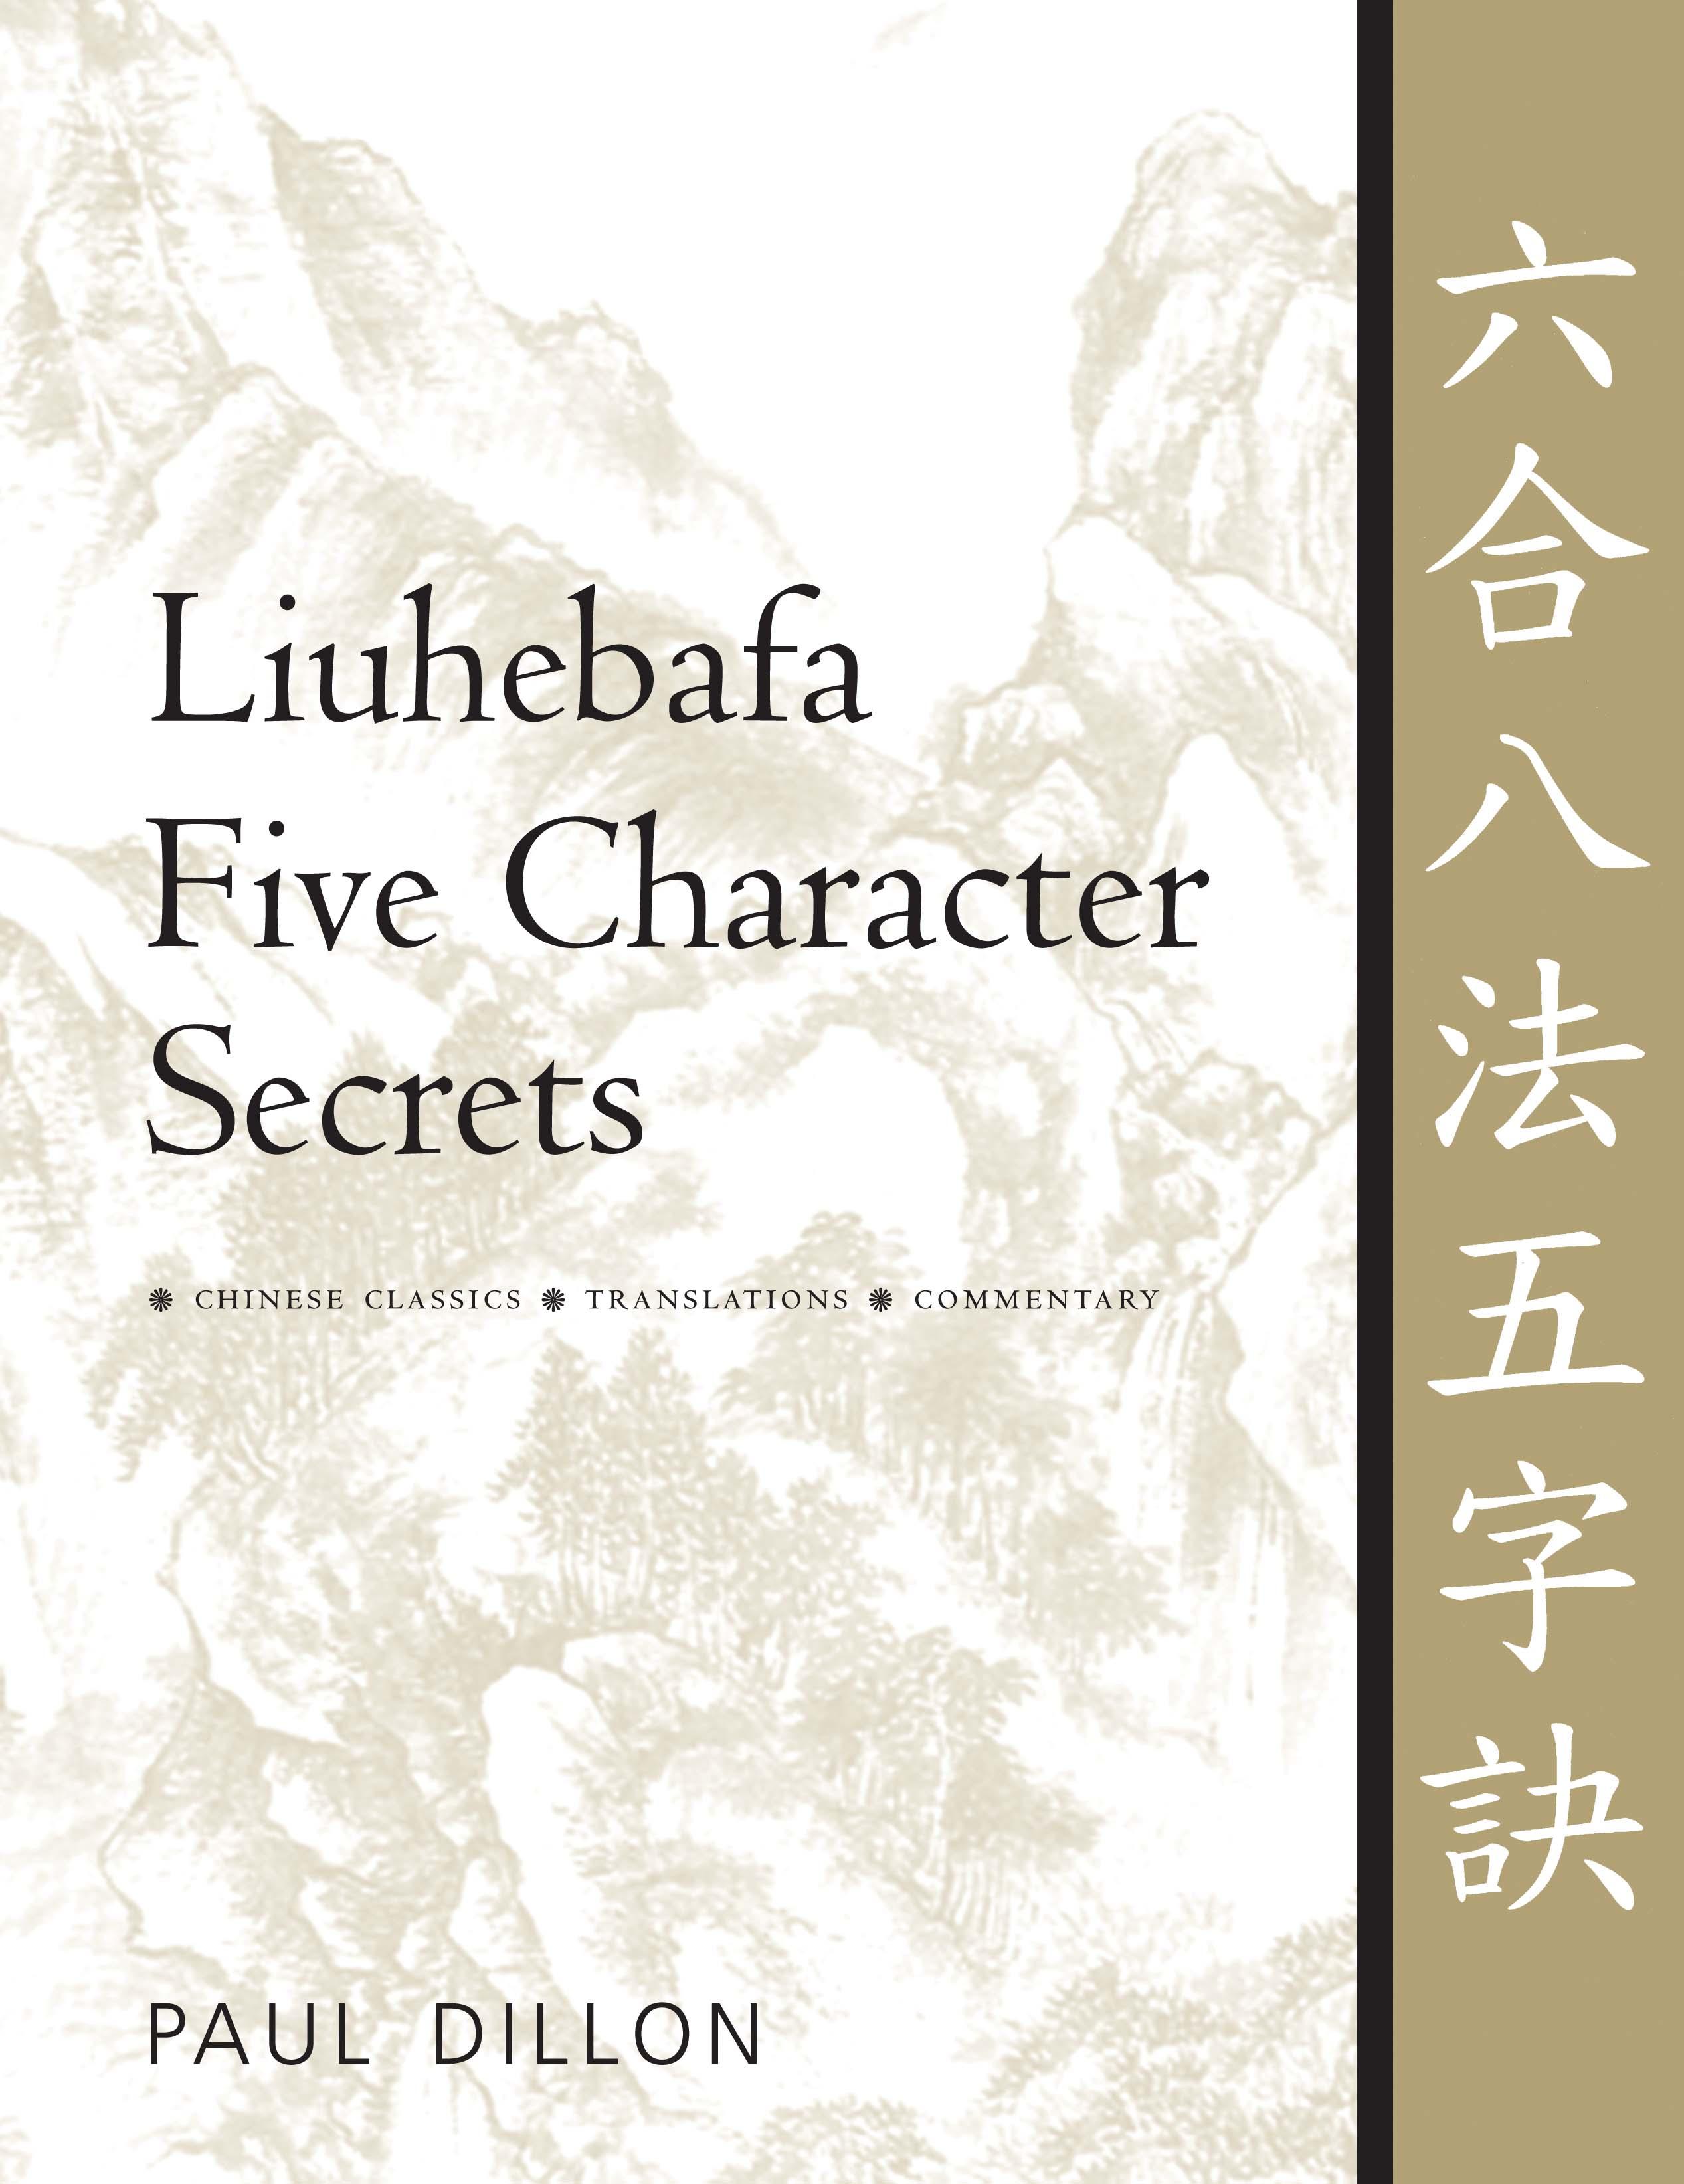 Liuhebafa Five Character Secrets: Chinese Classics, Translations, Commentary - Dillon, Paul